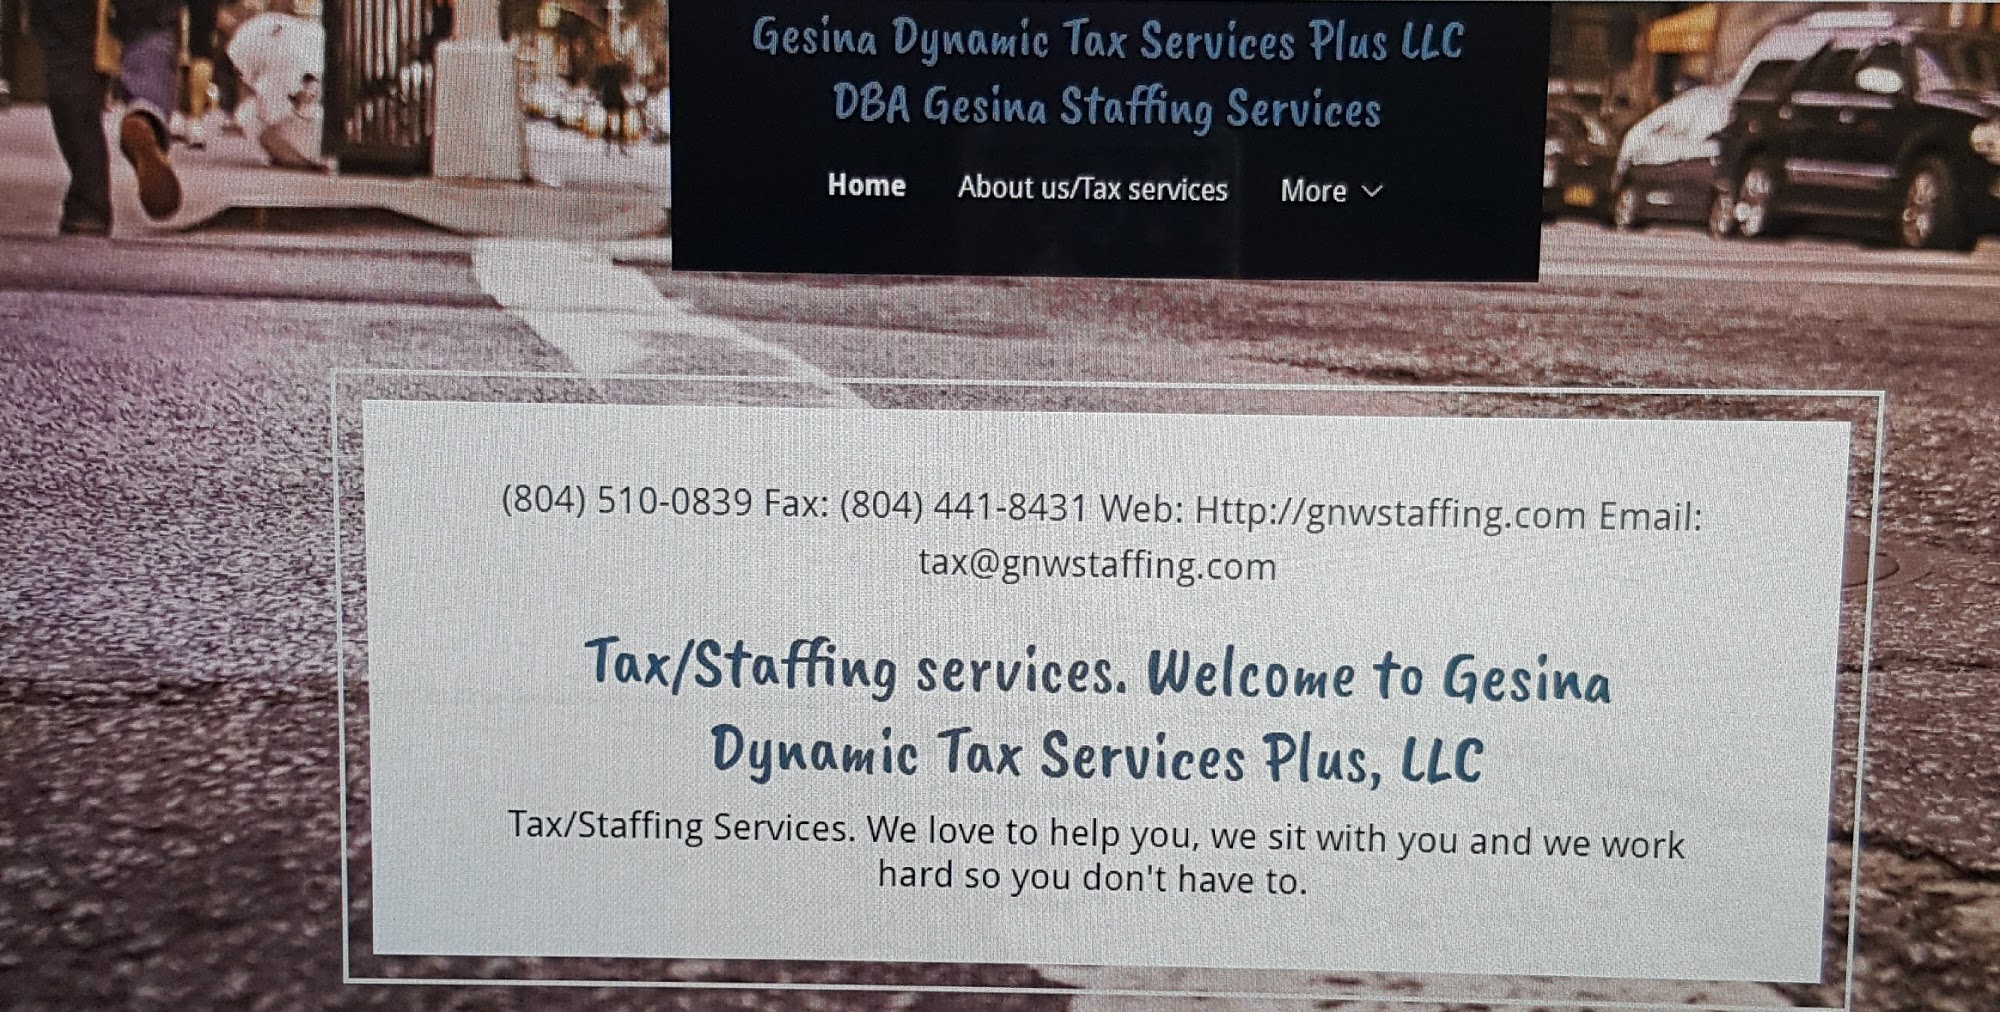 Gesina Dynamic Tax Services Plus, LLC/DBA Gesina Staffing Services